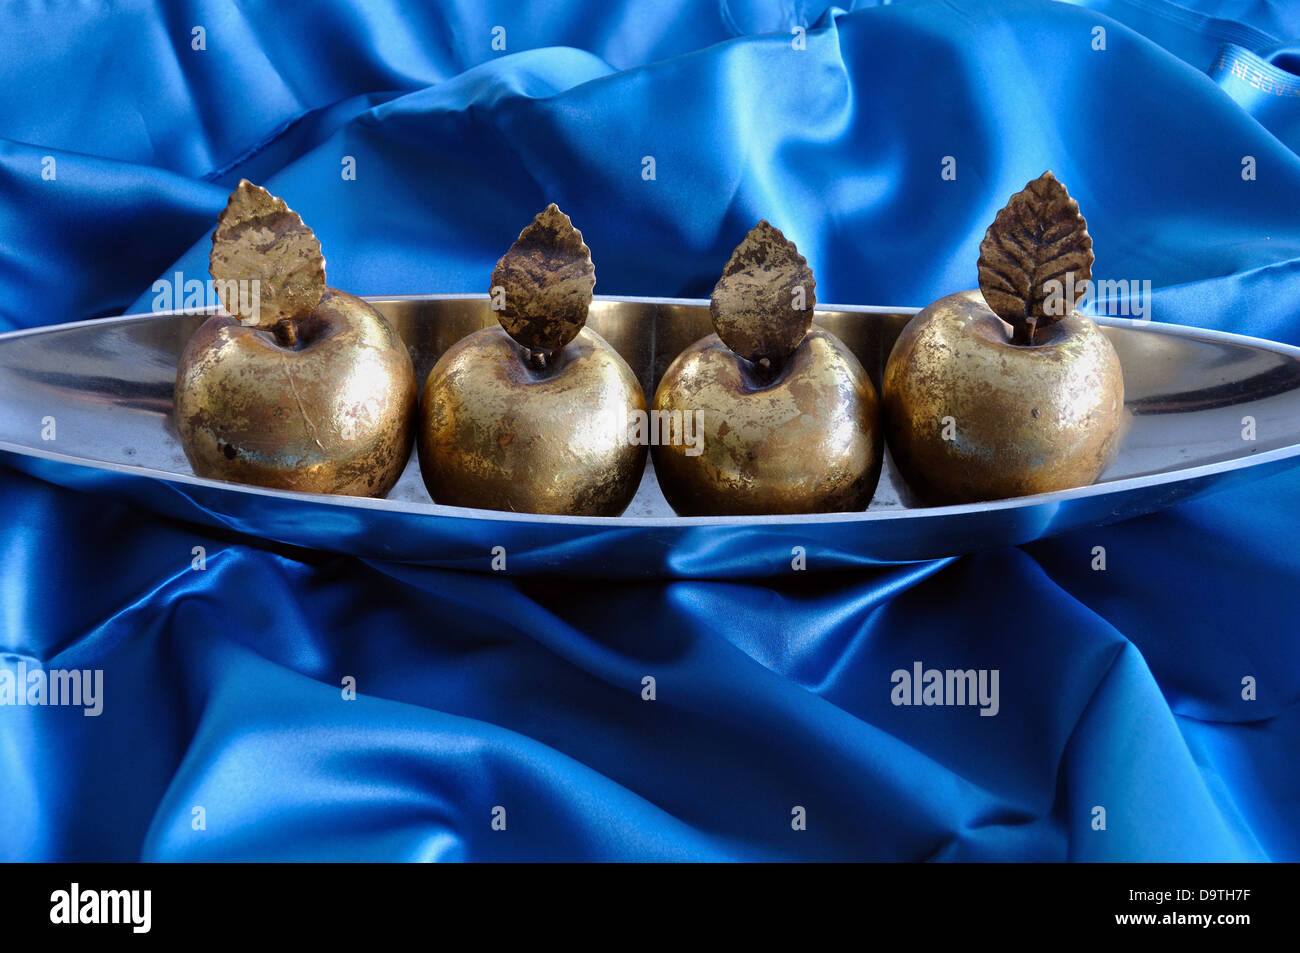 Golden apples on blue background. Christmas symbol vintage decorative objects. Stock Photo